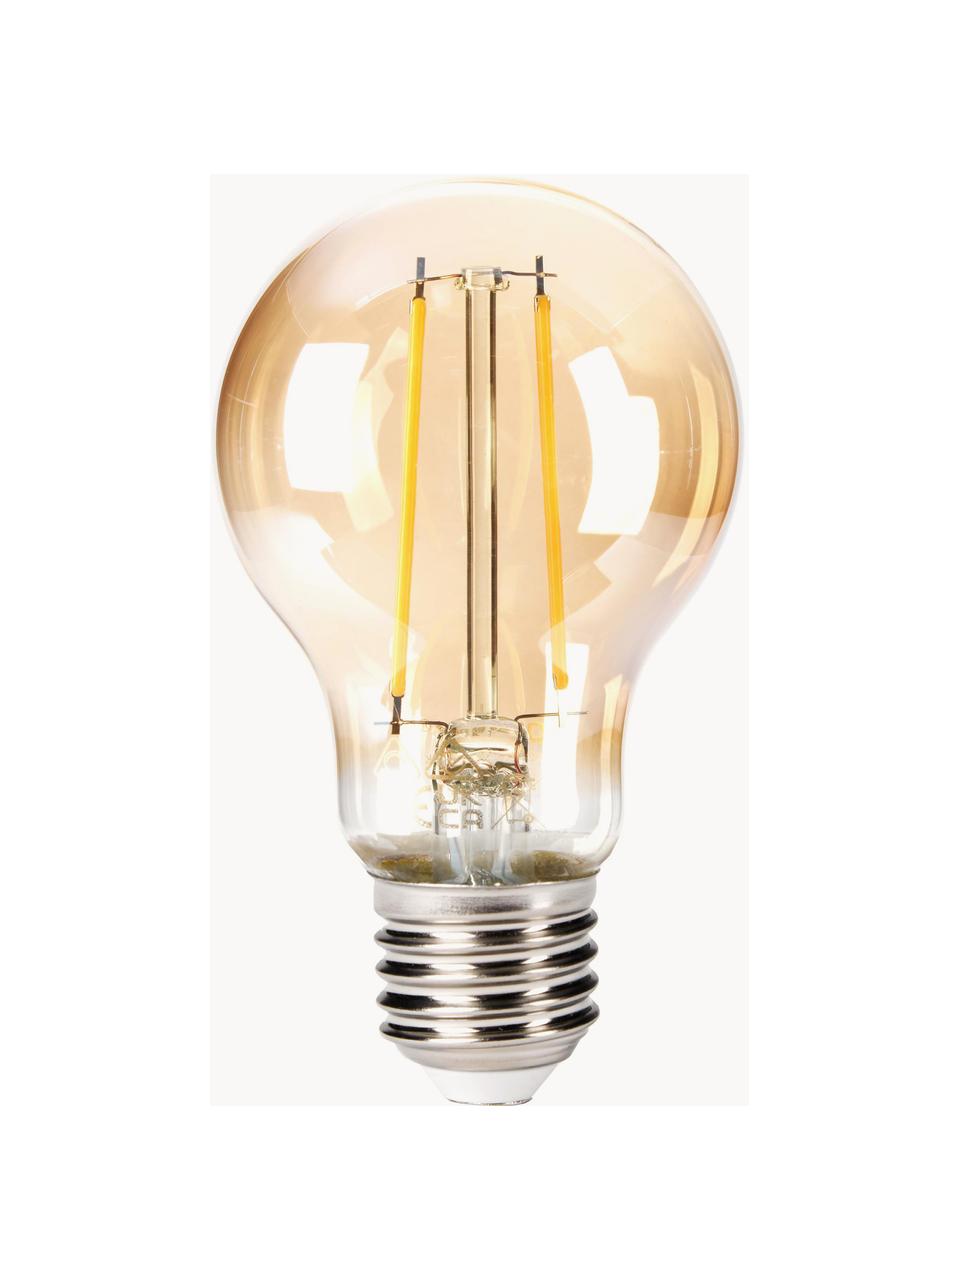 E27 Leuchtmittel, warmweiß, 1 Stück, Leuchtmittelschirm: Glas, Leuchtmittelfassung: Aluminium, Transparent, Goldfarben, Ø 6 x H 10 cm